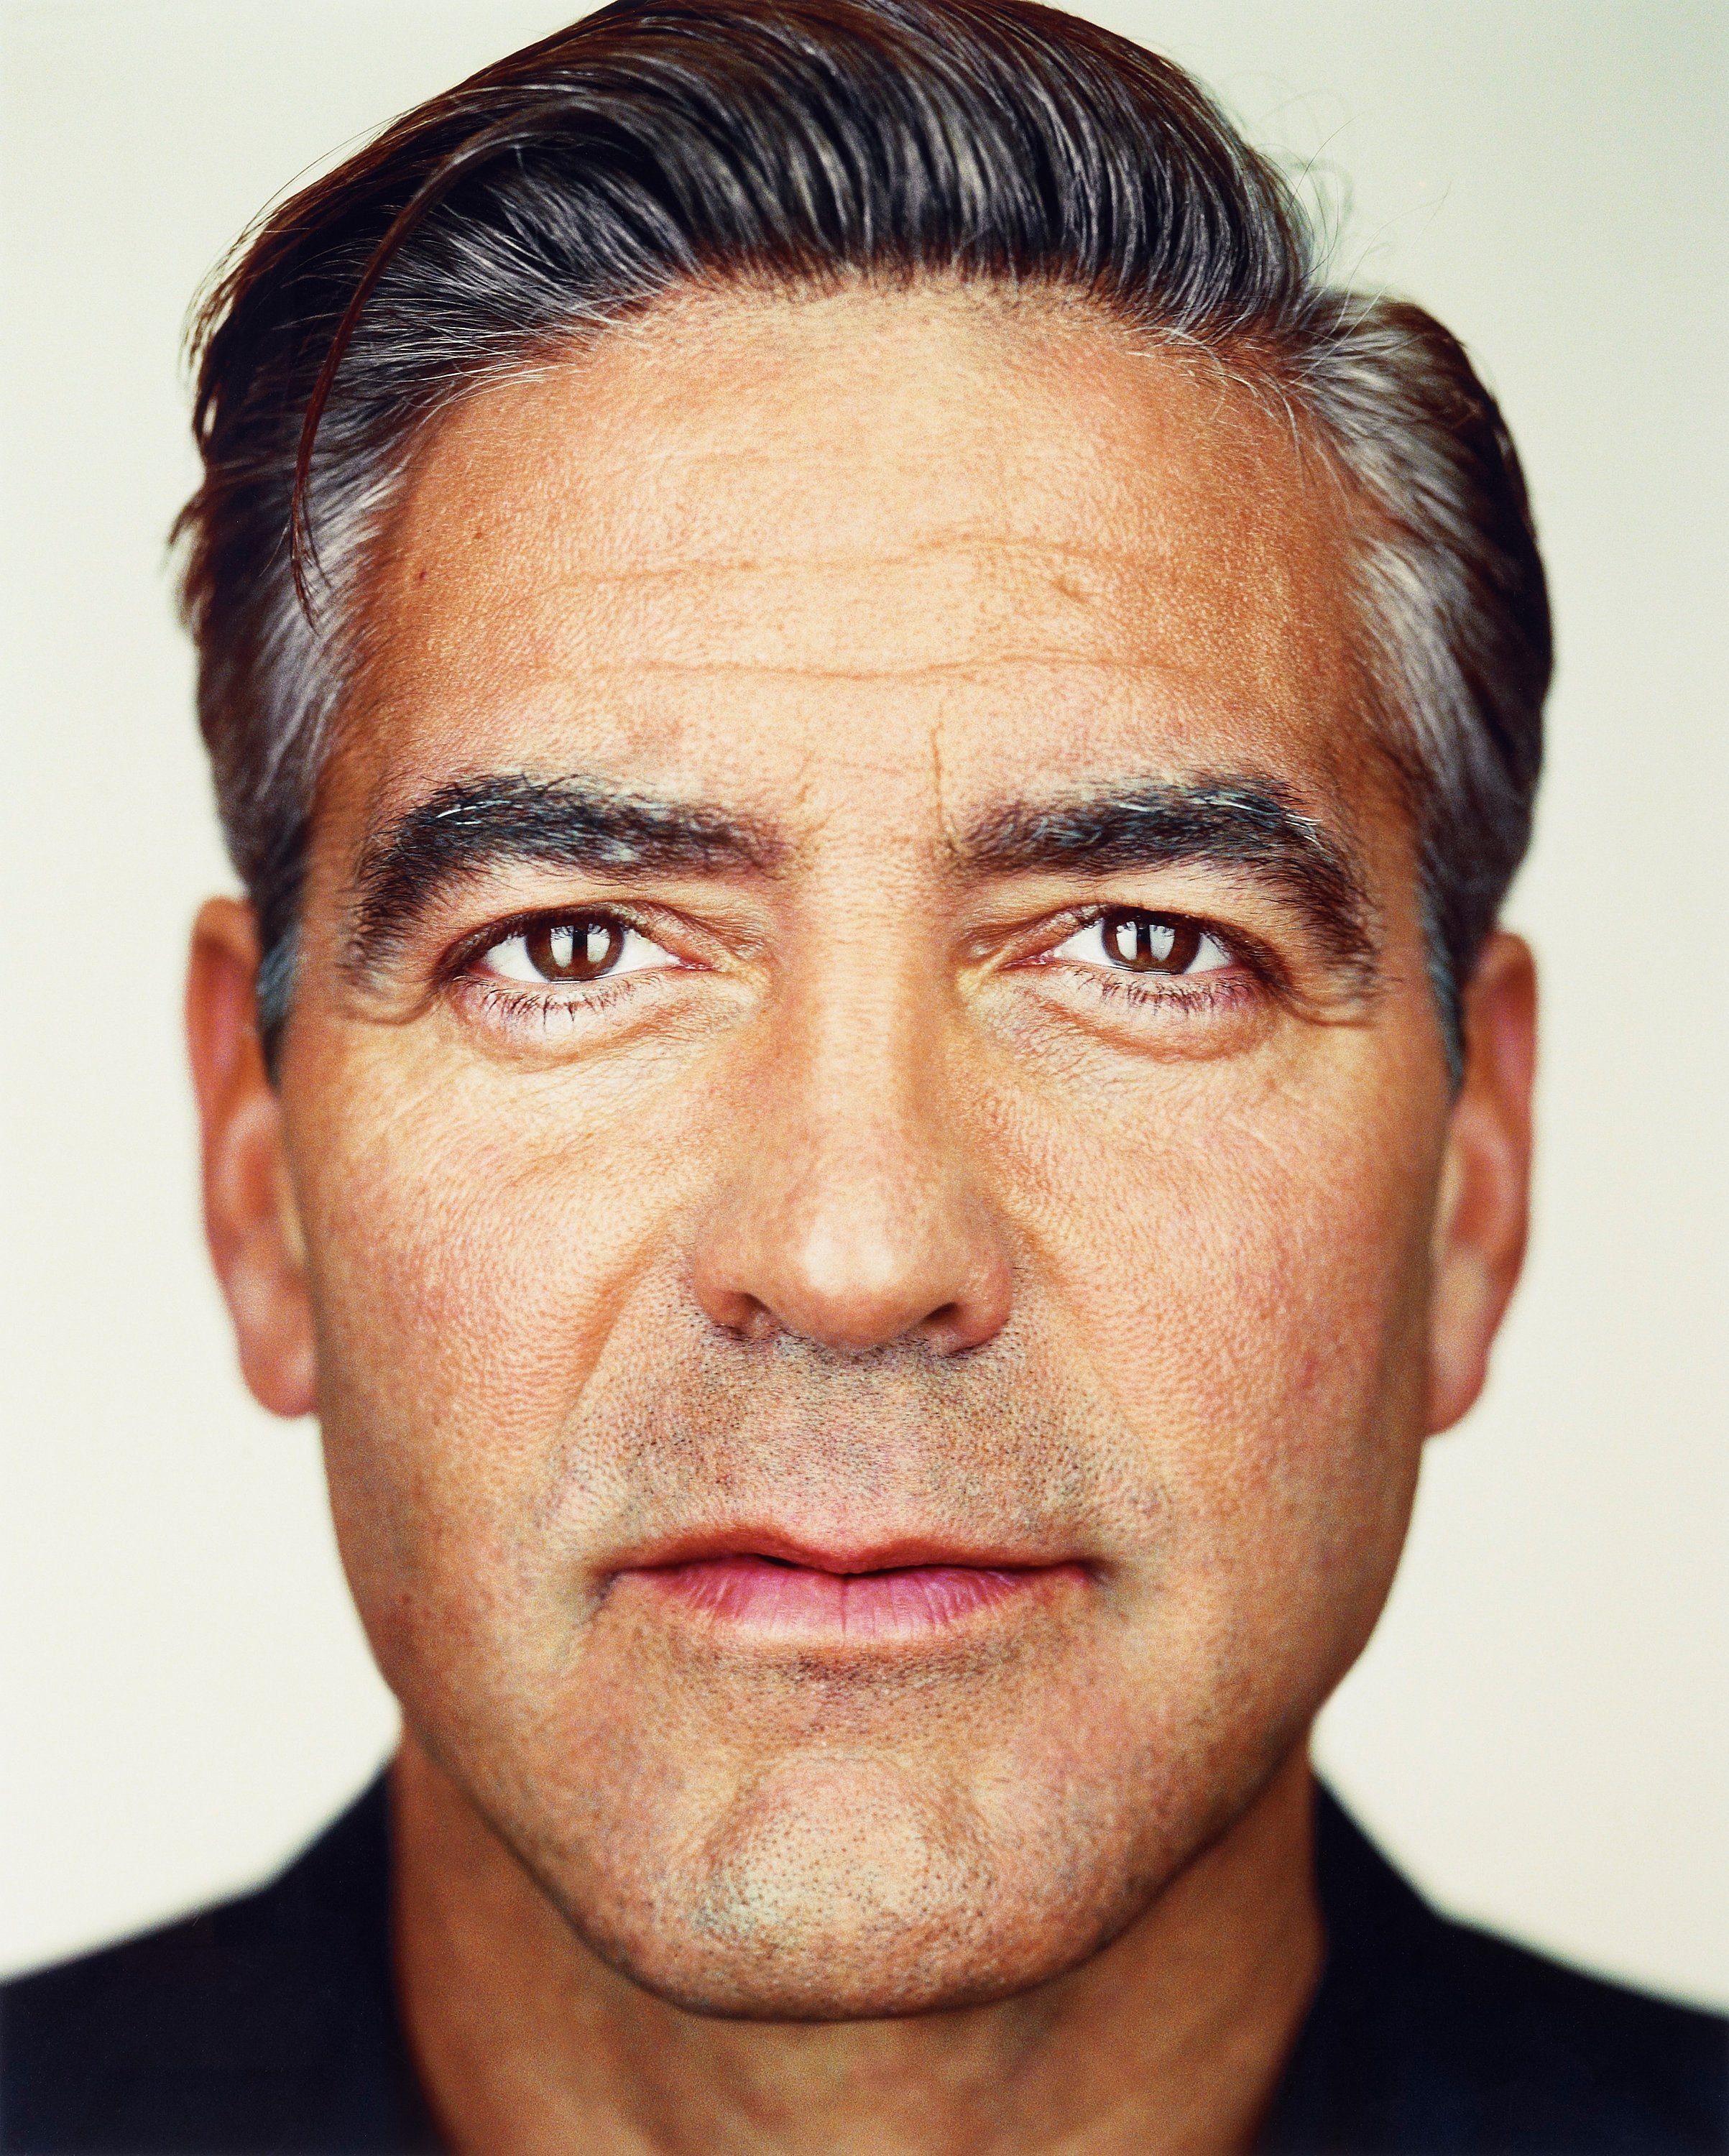 Лицо человека. Мартин Шоллер. Мартин Шоллер Клуни. Мартин Шоллер фотограф. Мартин Шоллер фото.